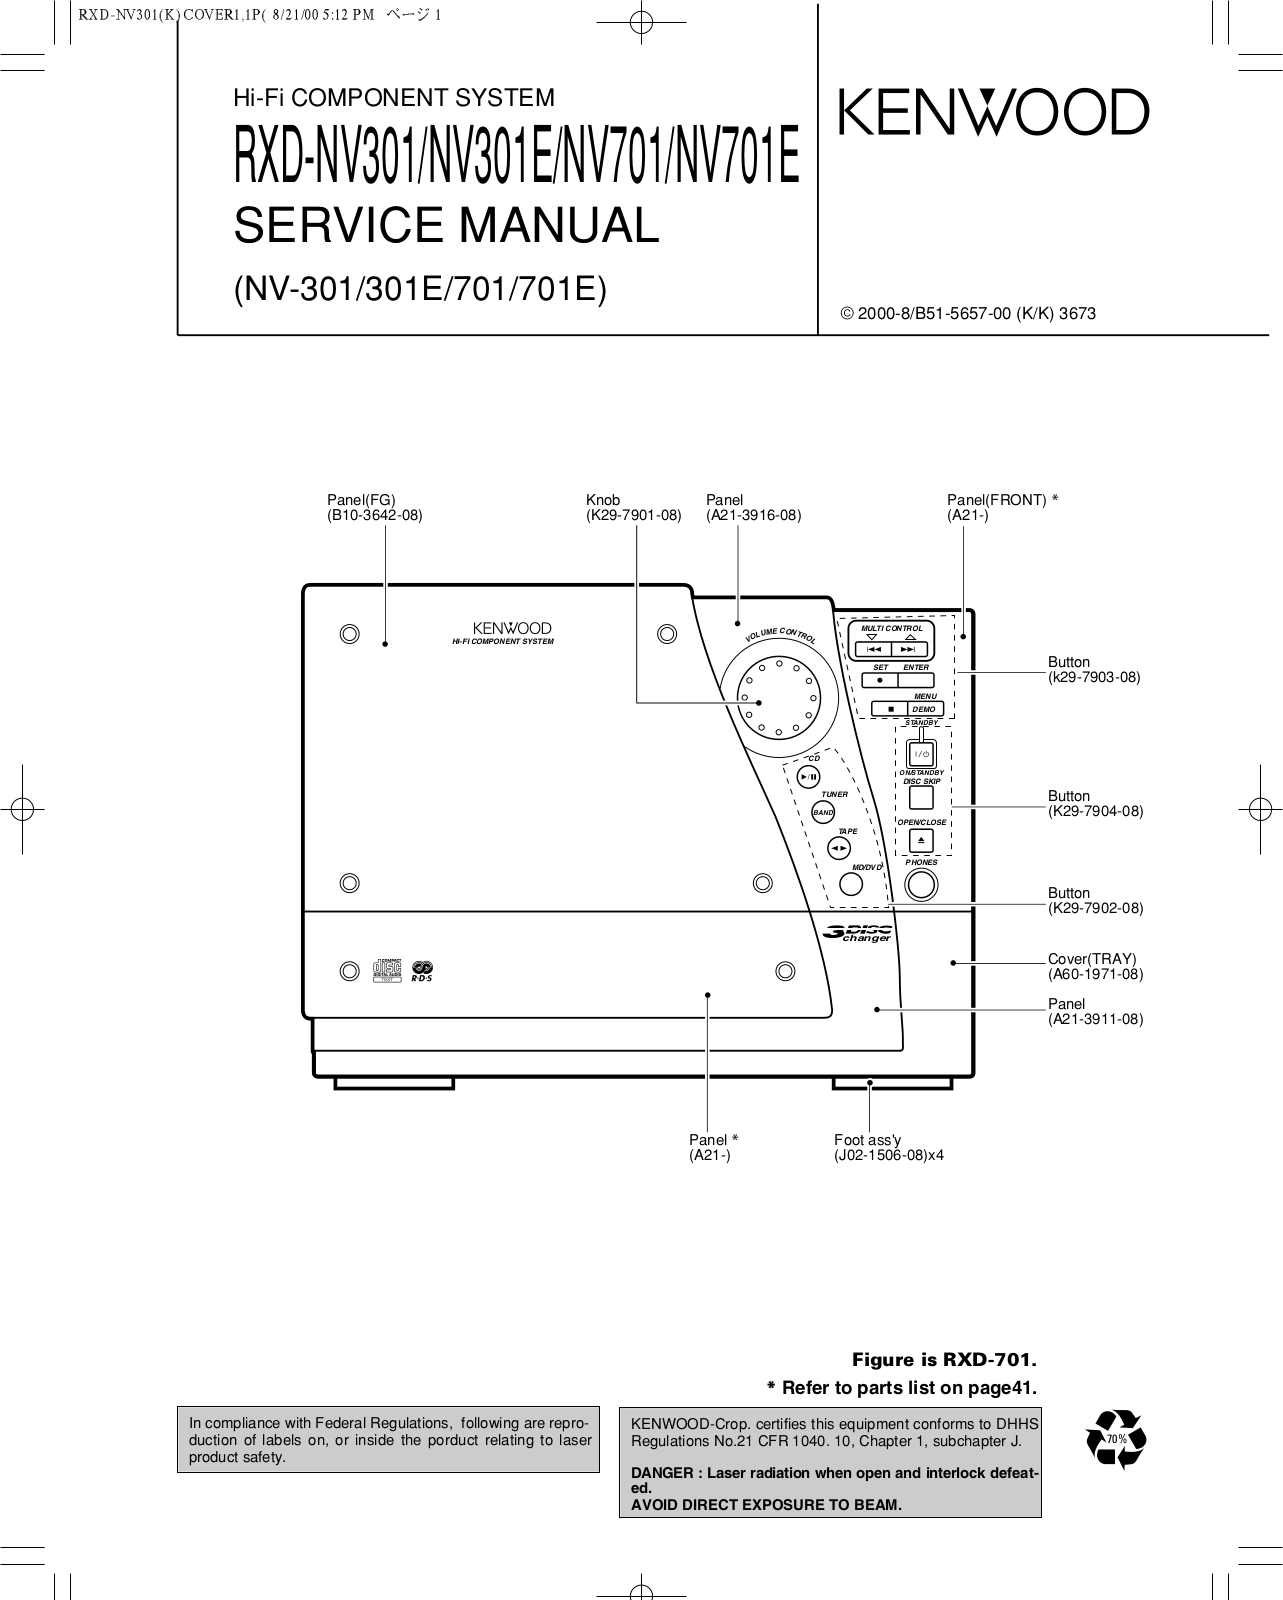 Kenwood RX-DNV701-E, RX-DNV701, RX-DNV301-E, RX-DNV301 Service Manual